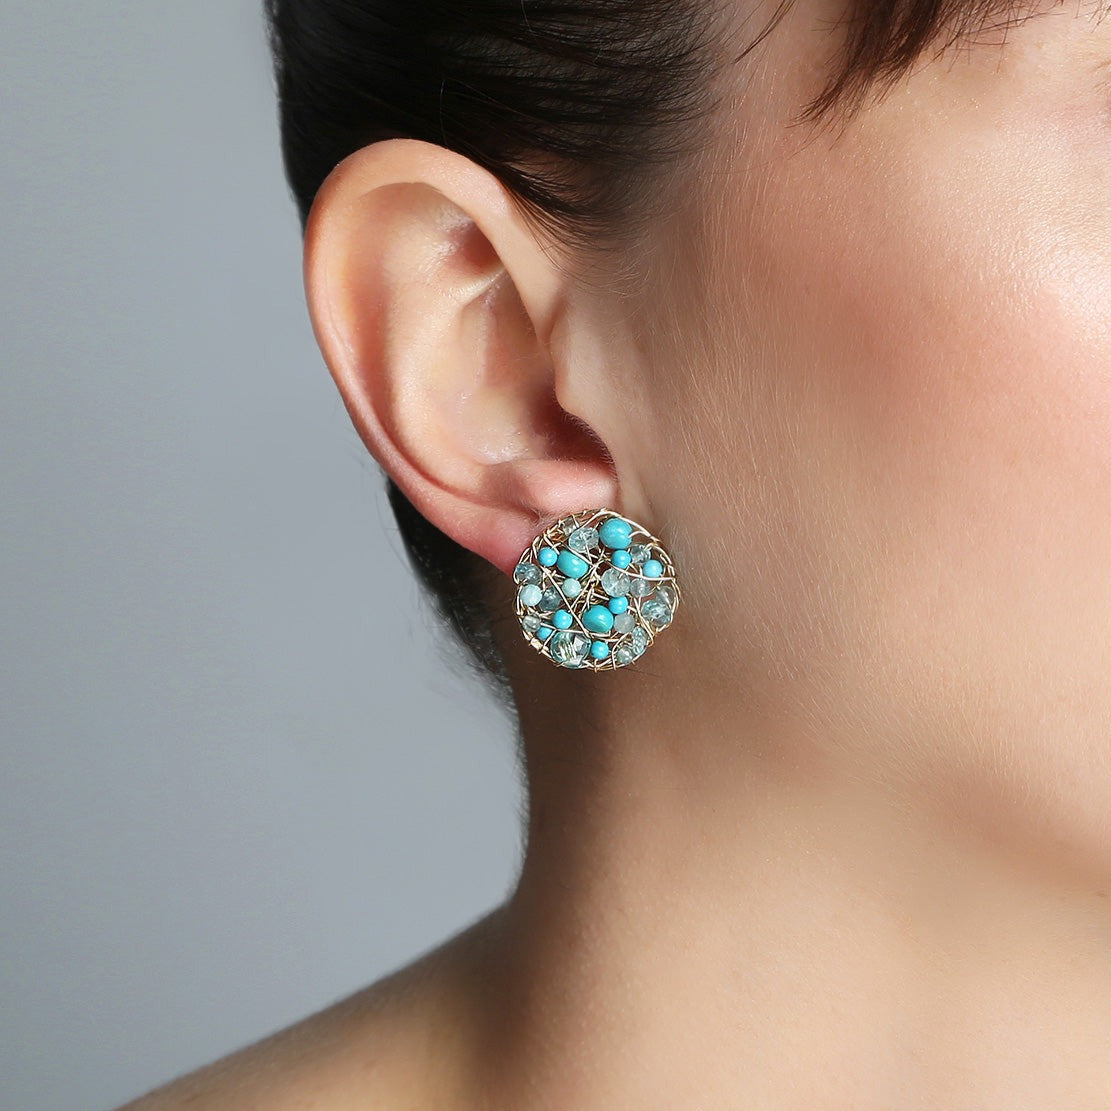 Aura Stud Earrings #1 (20mm) - Turquoise Mix Gems Earrings TARBAY   